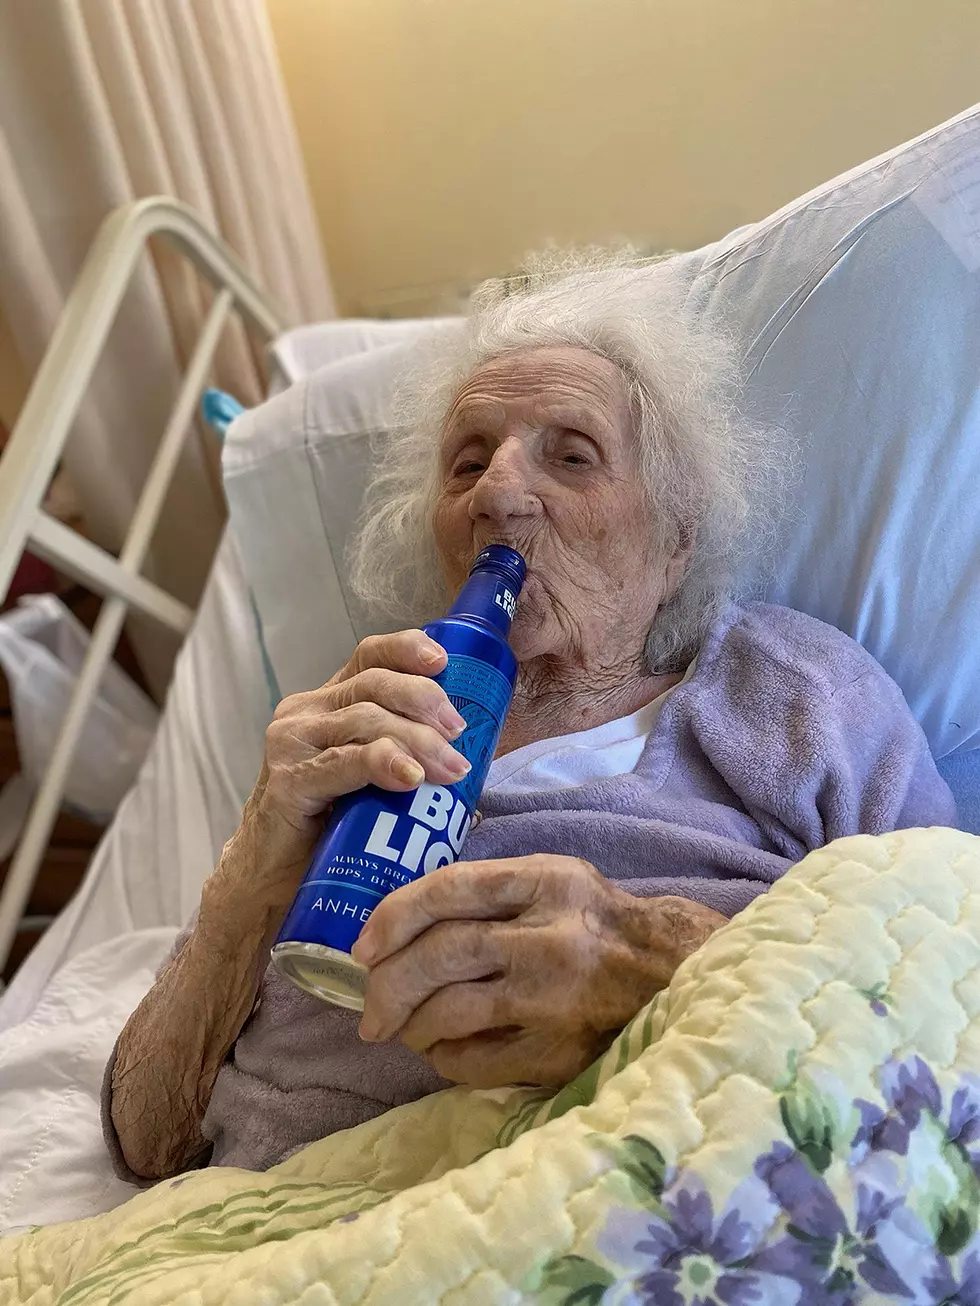 103-Year-Old Beats Coronavirus, Celebrates By Drinking a Bud Light